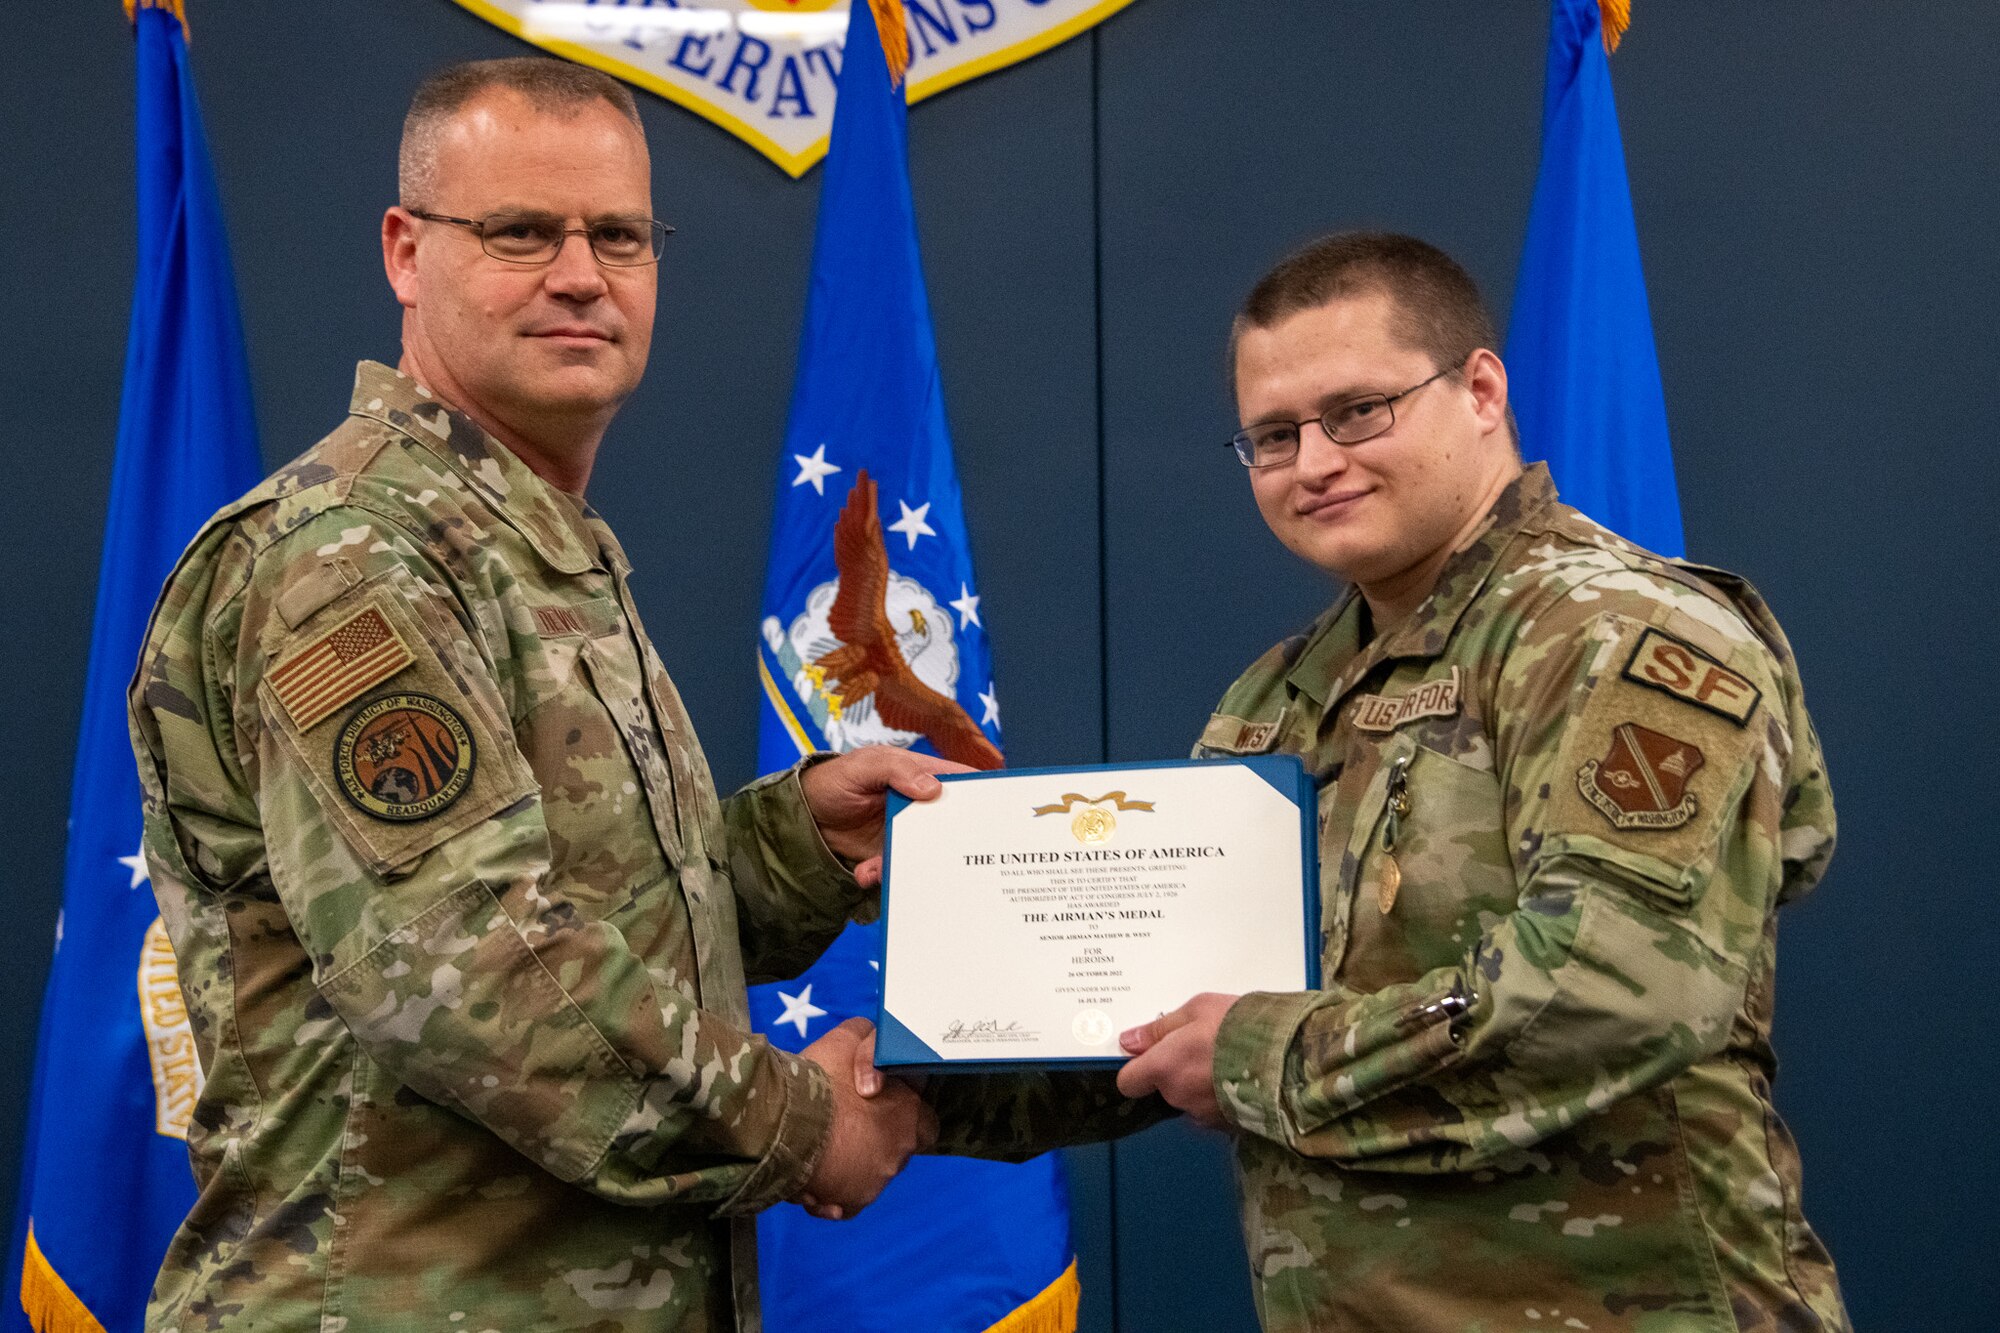 Maj. Gen. Daniel A. DeVoe presents a certificate to Senior Airman Matthew B. West.